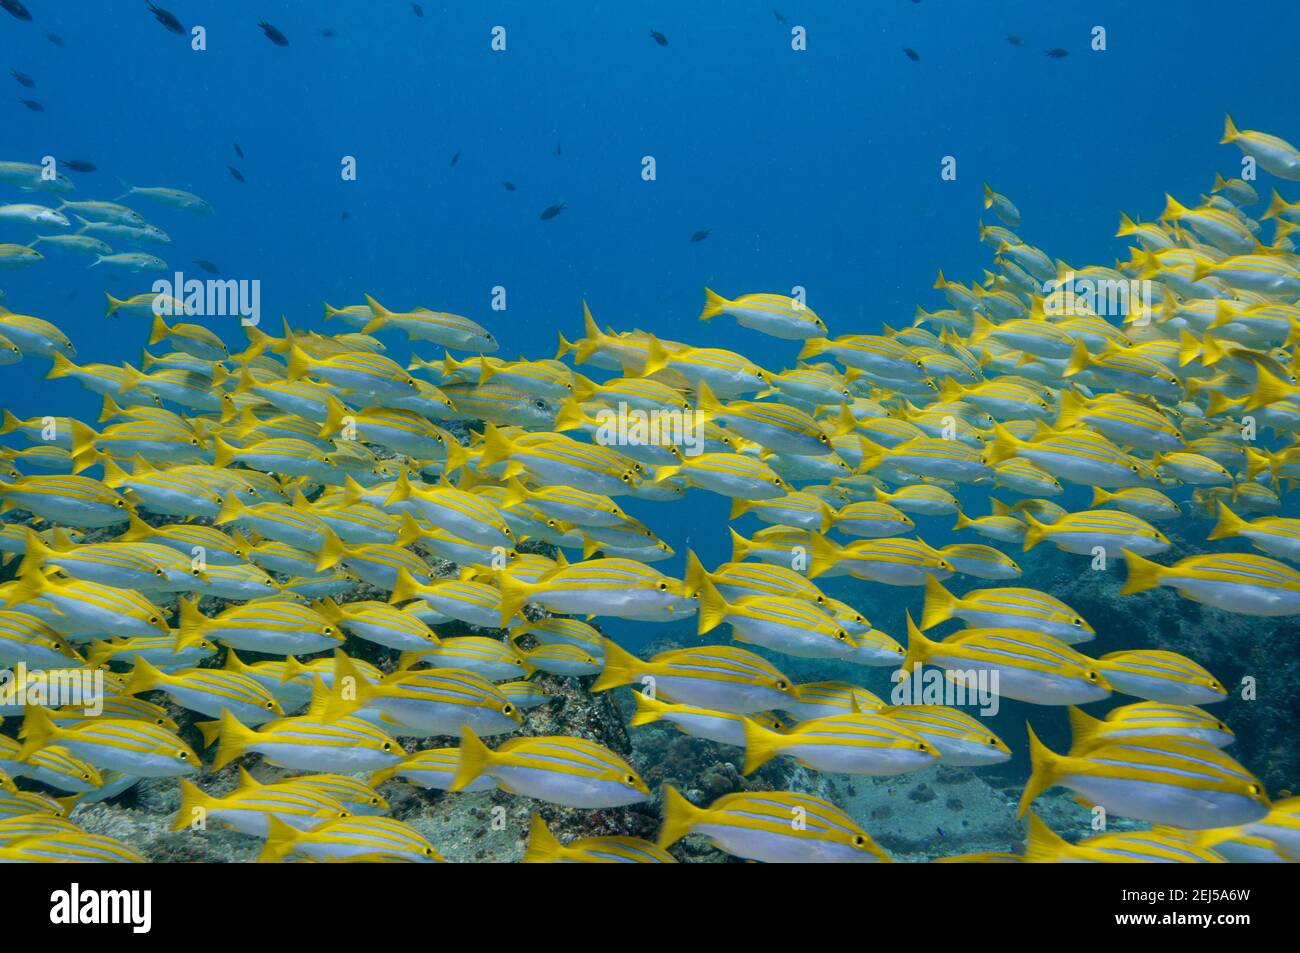 School of tropical yellow fish Bengal Snapper ( Lutjanus bengalensis ), Seychelles Stock Photo